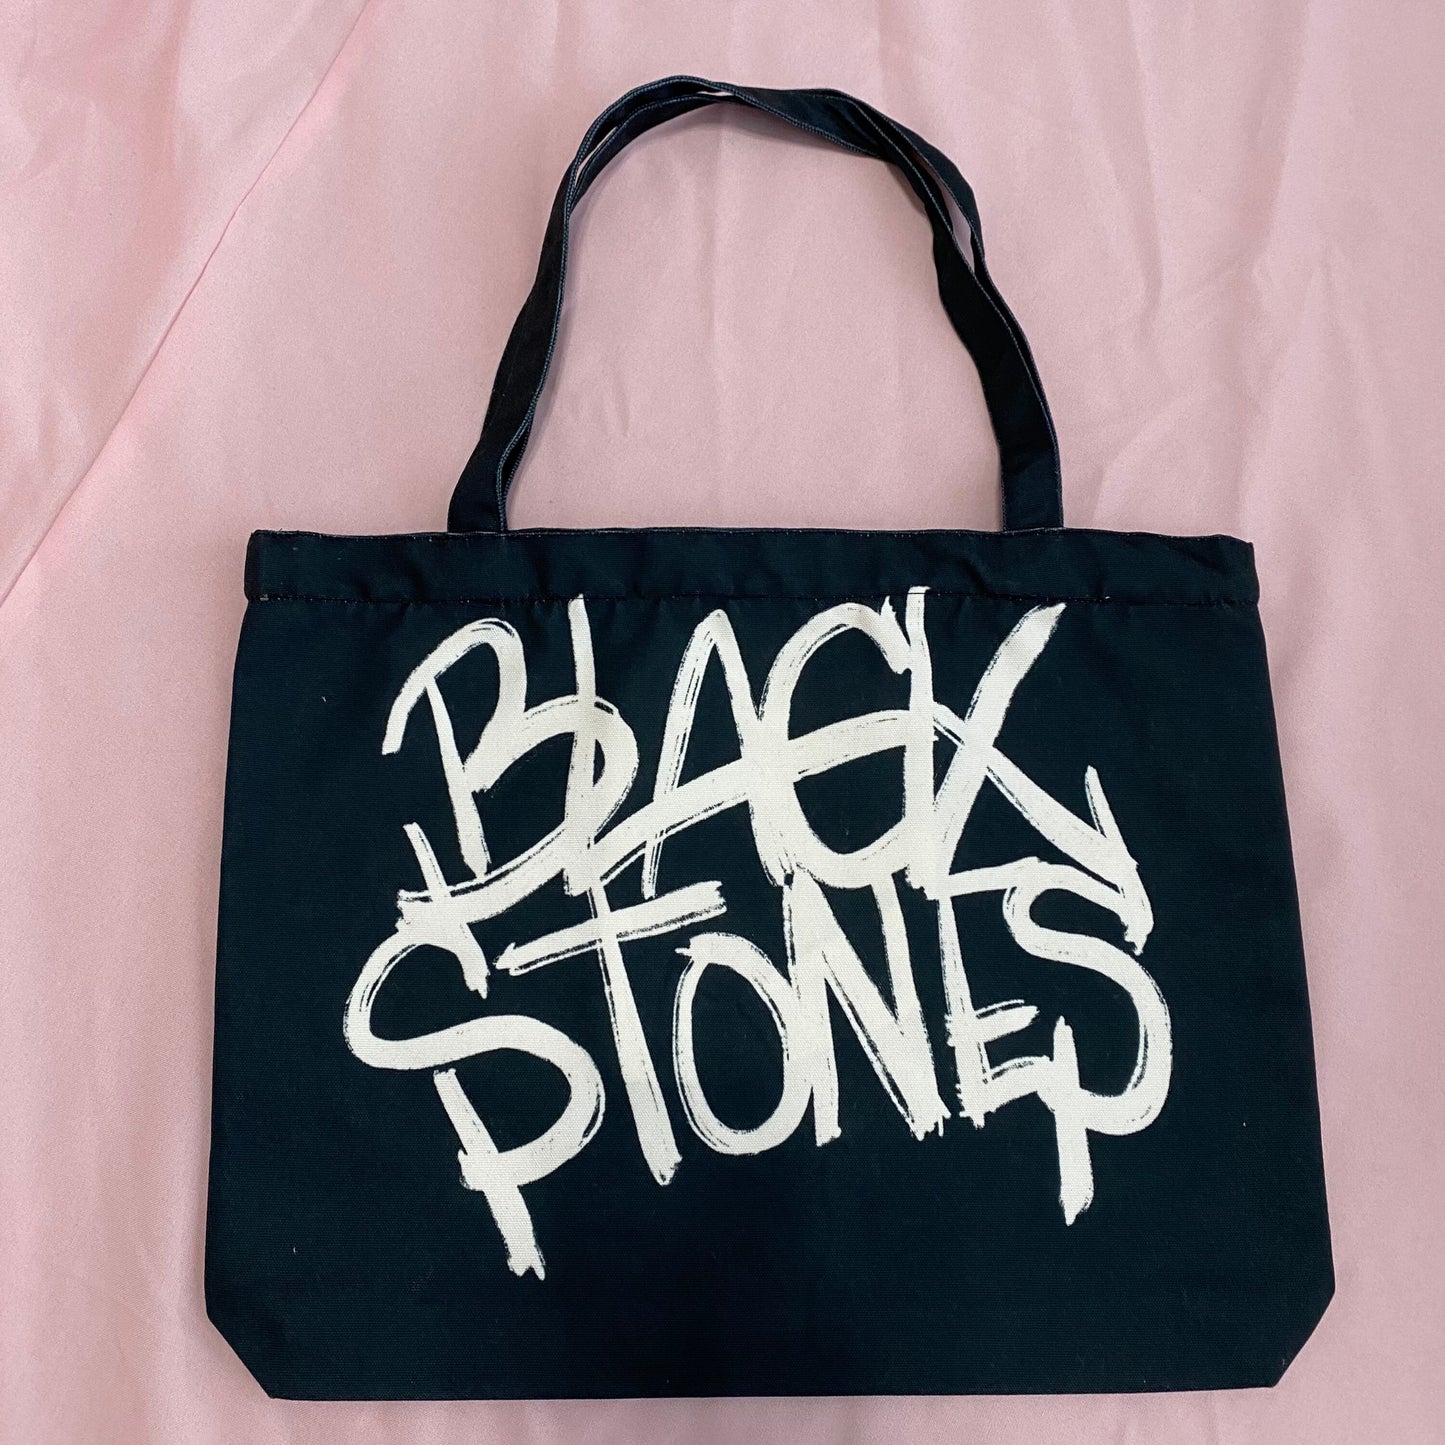 Nana Inspired Black Stones / BLAST Broken Rose Tour Tote Bag